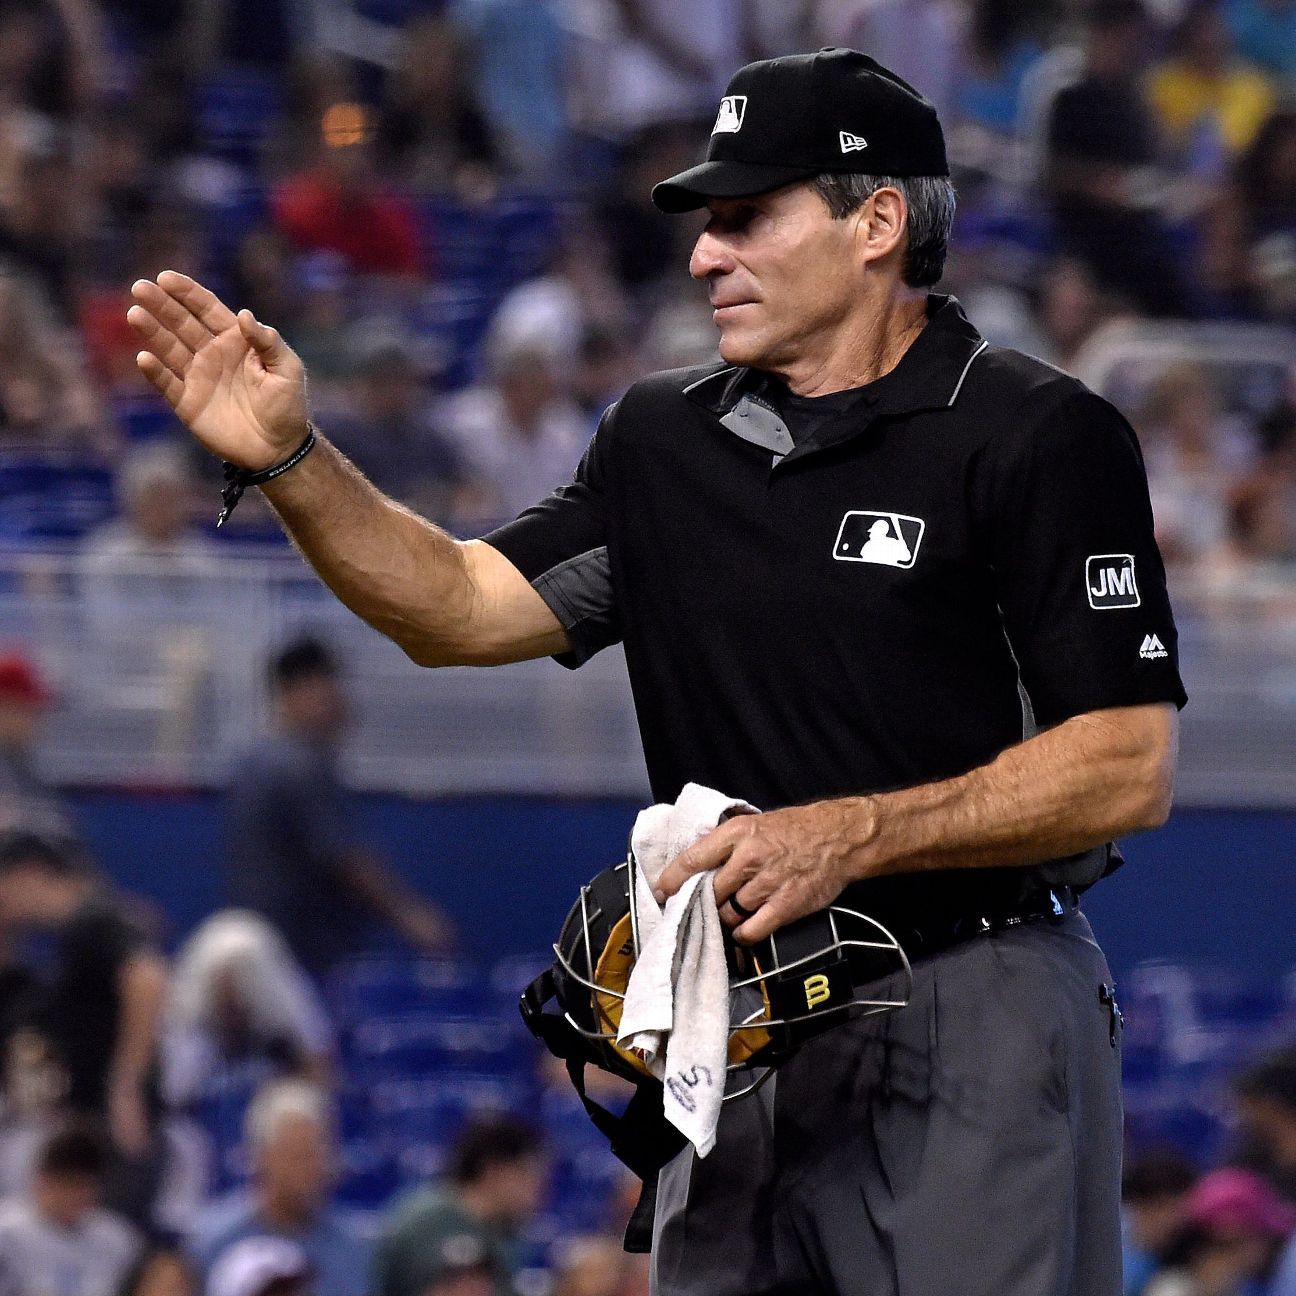 Iassogna will be World Series umpire crew chief